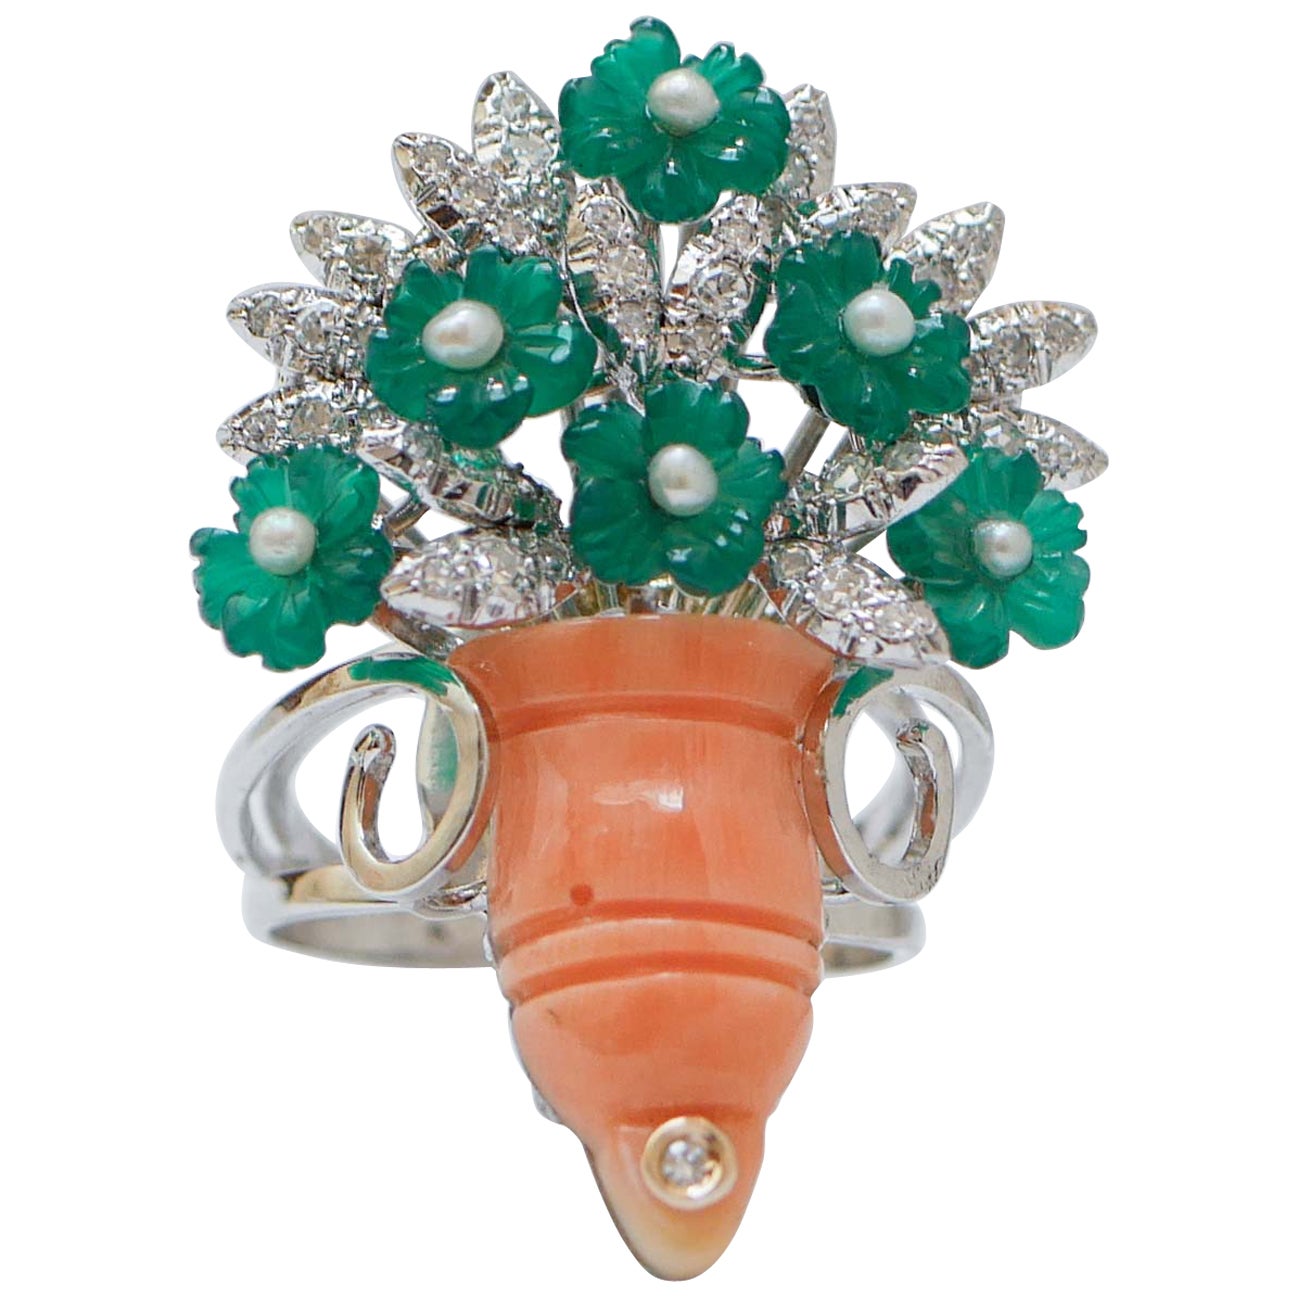 Coral, Pearls, Diamonds, Green Agate, 14 Karat White Gold Ring.